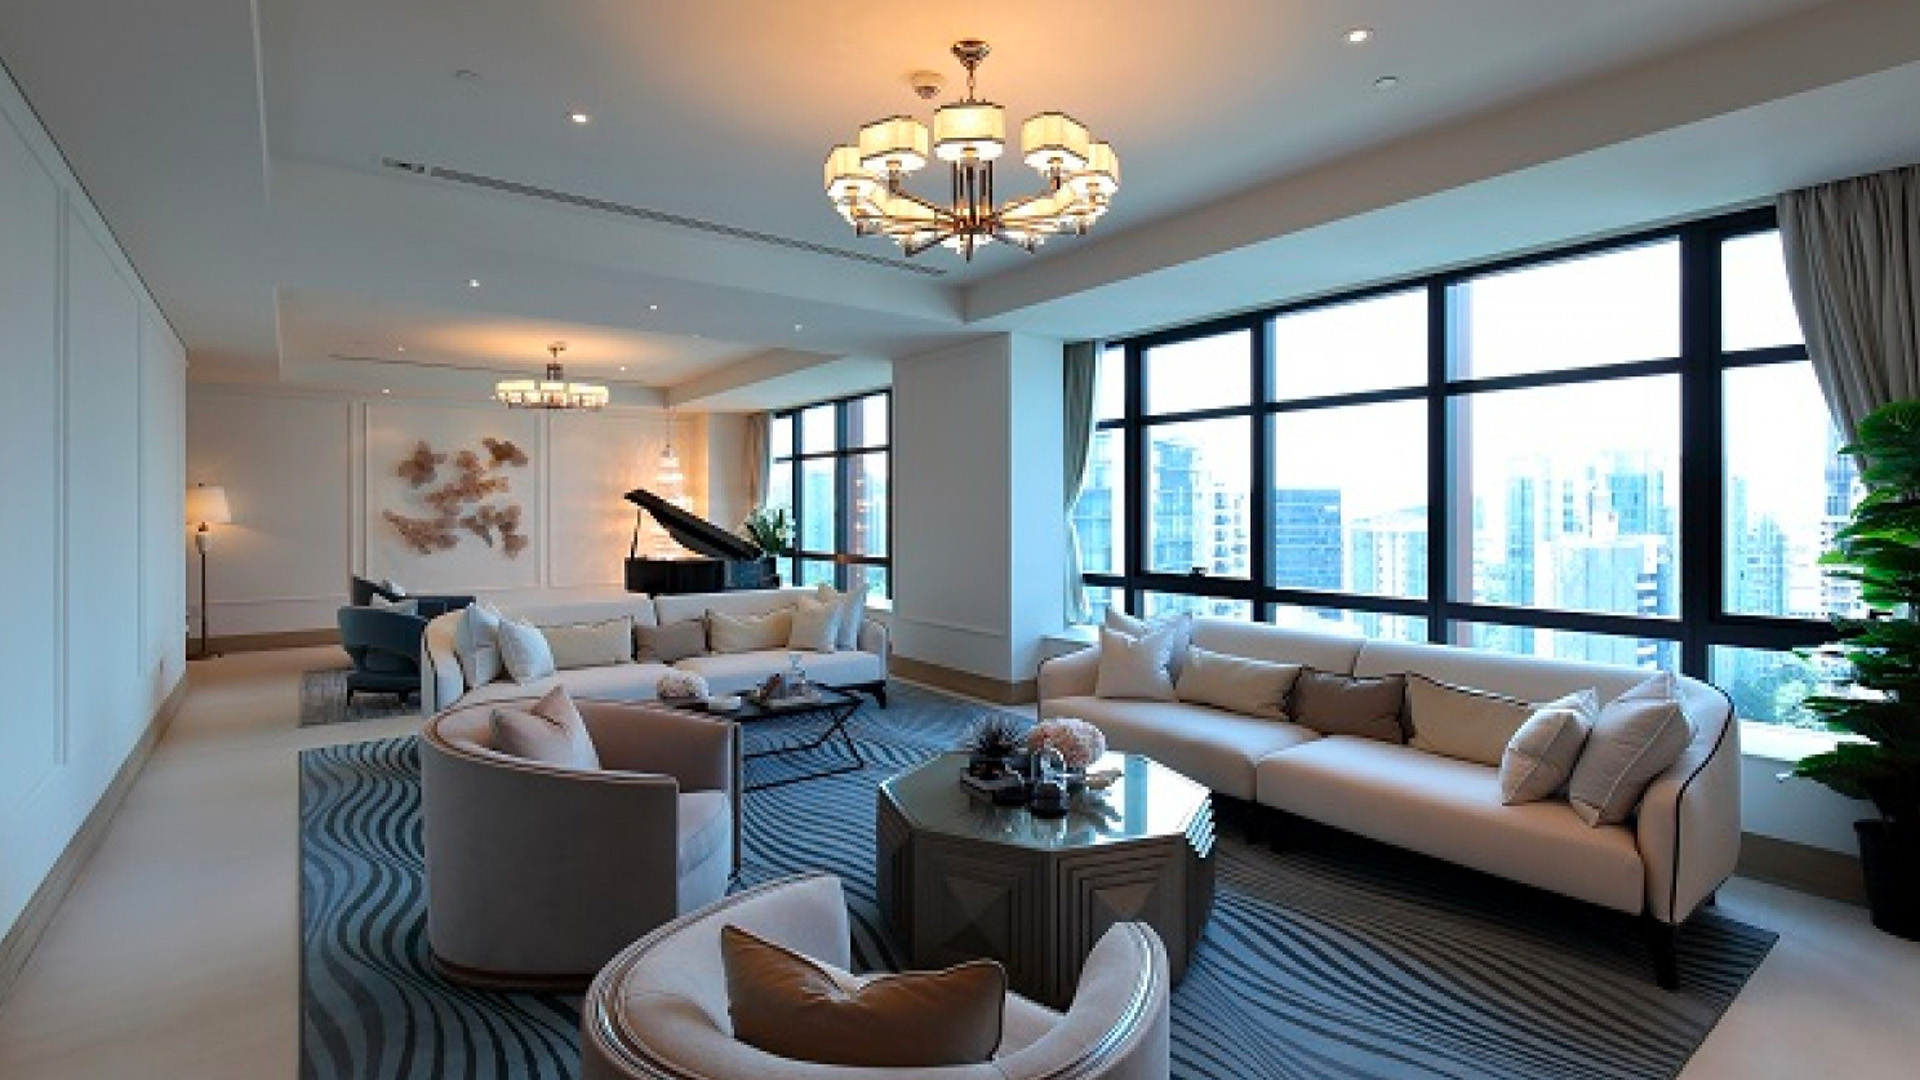 The Ritz-Carlton Residences condo penthouses for sale Singapore